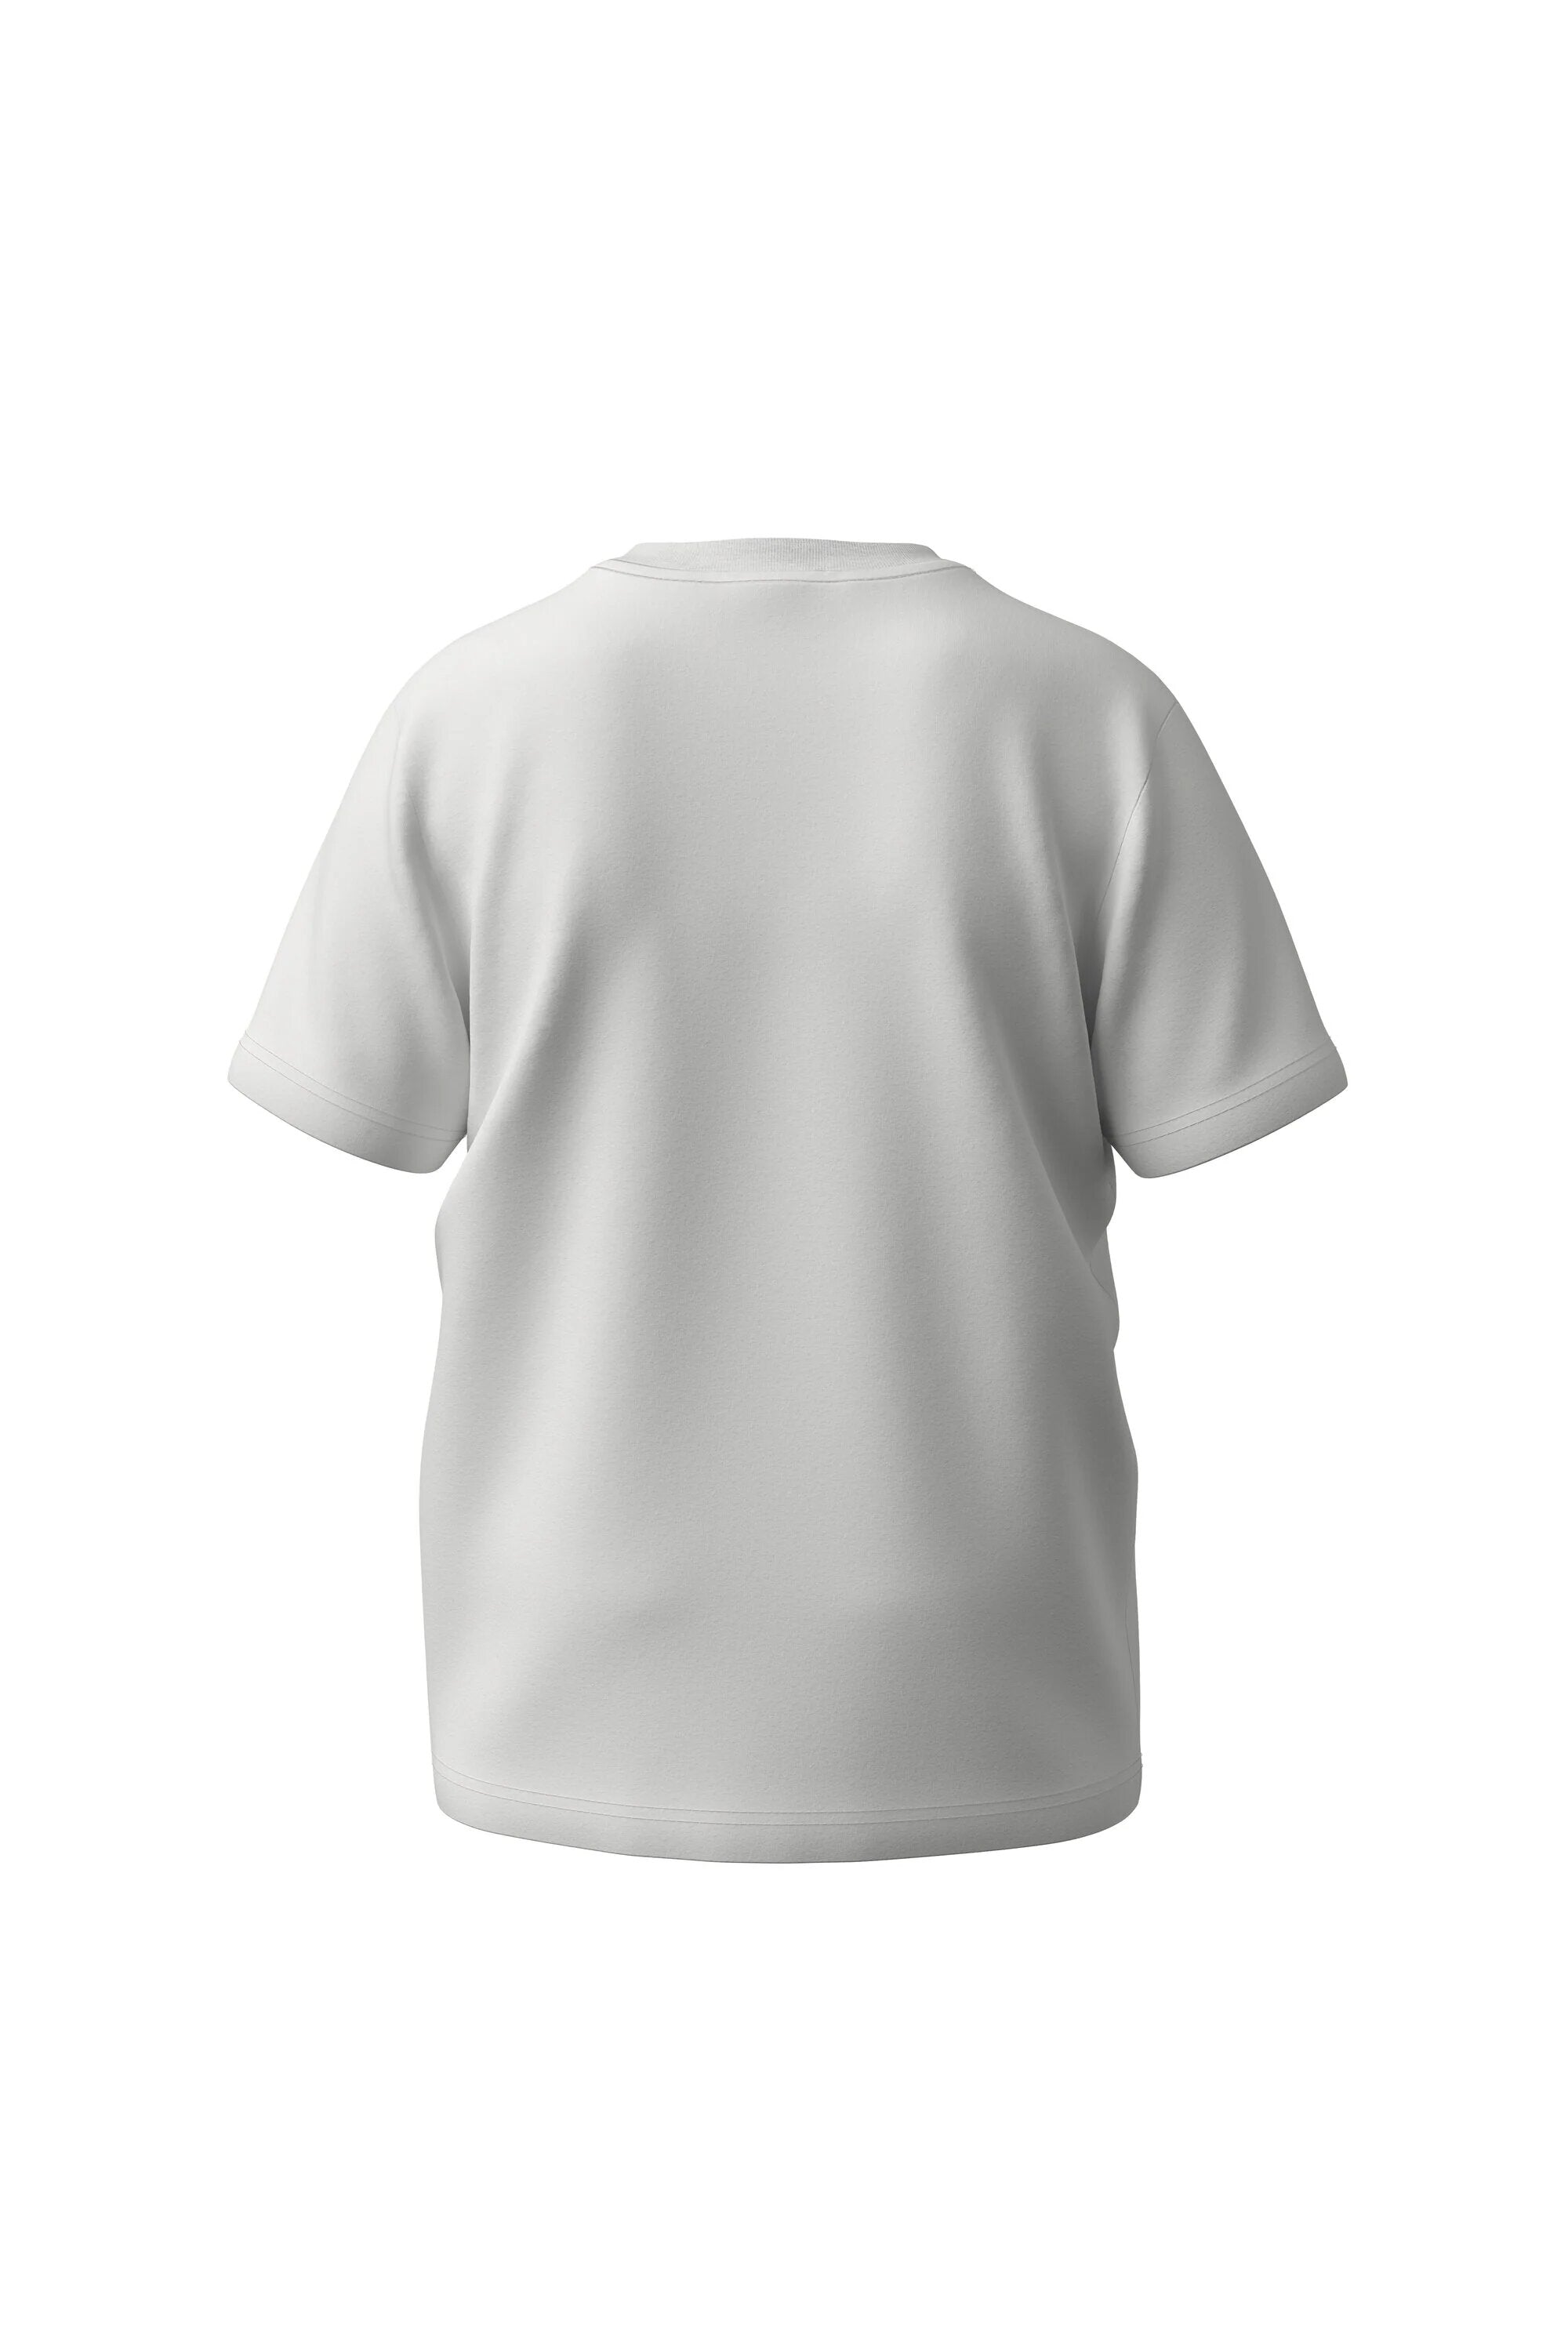 DSQUARED2-T-Shirt Unisex Bambino Logo-Bianco